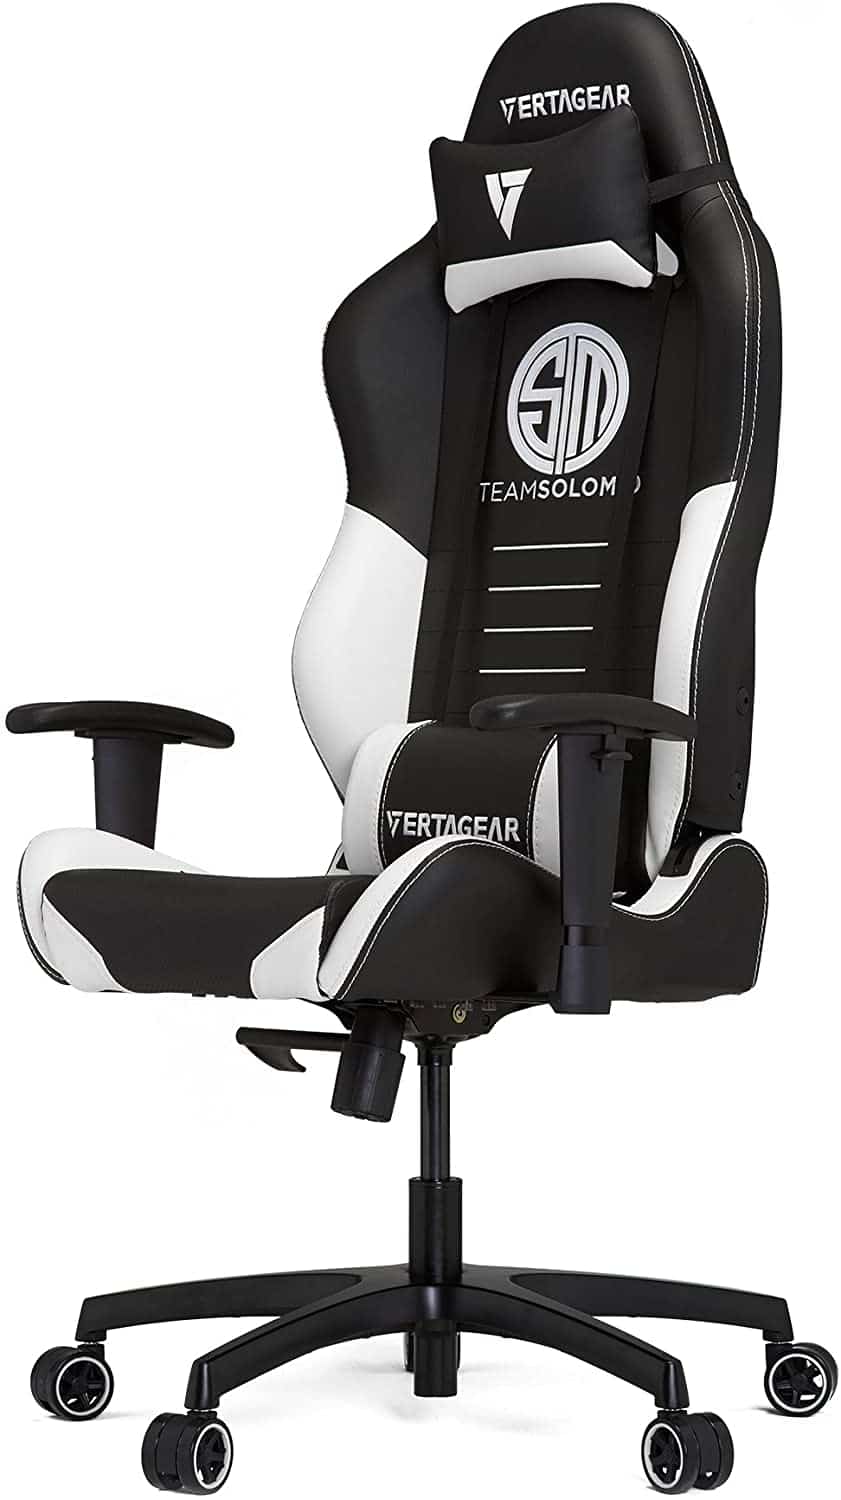 Vertagear TSM Racing Series Gaming Chair,Large,Black/White